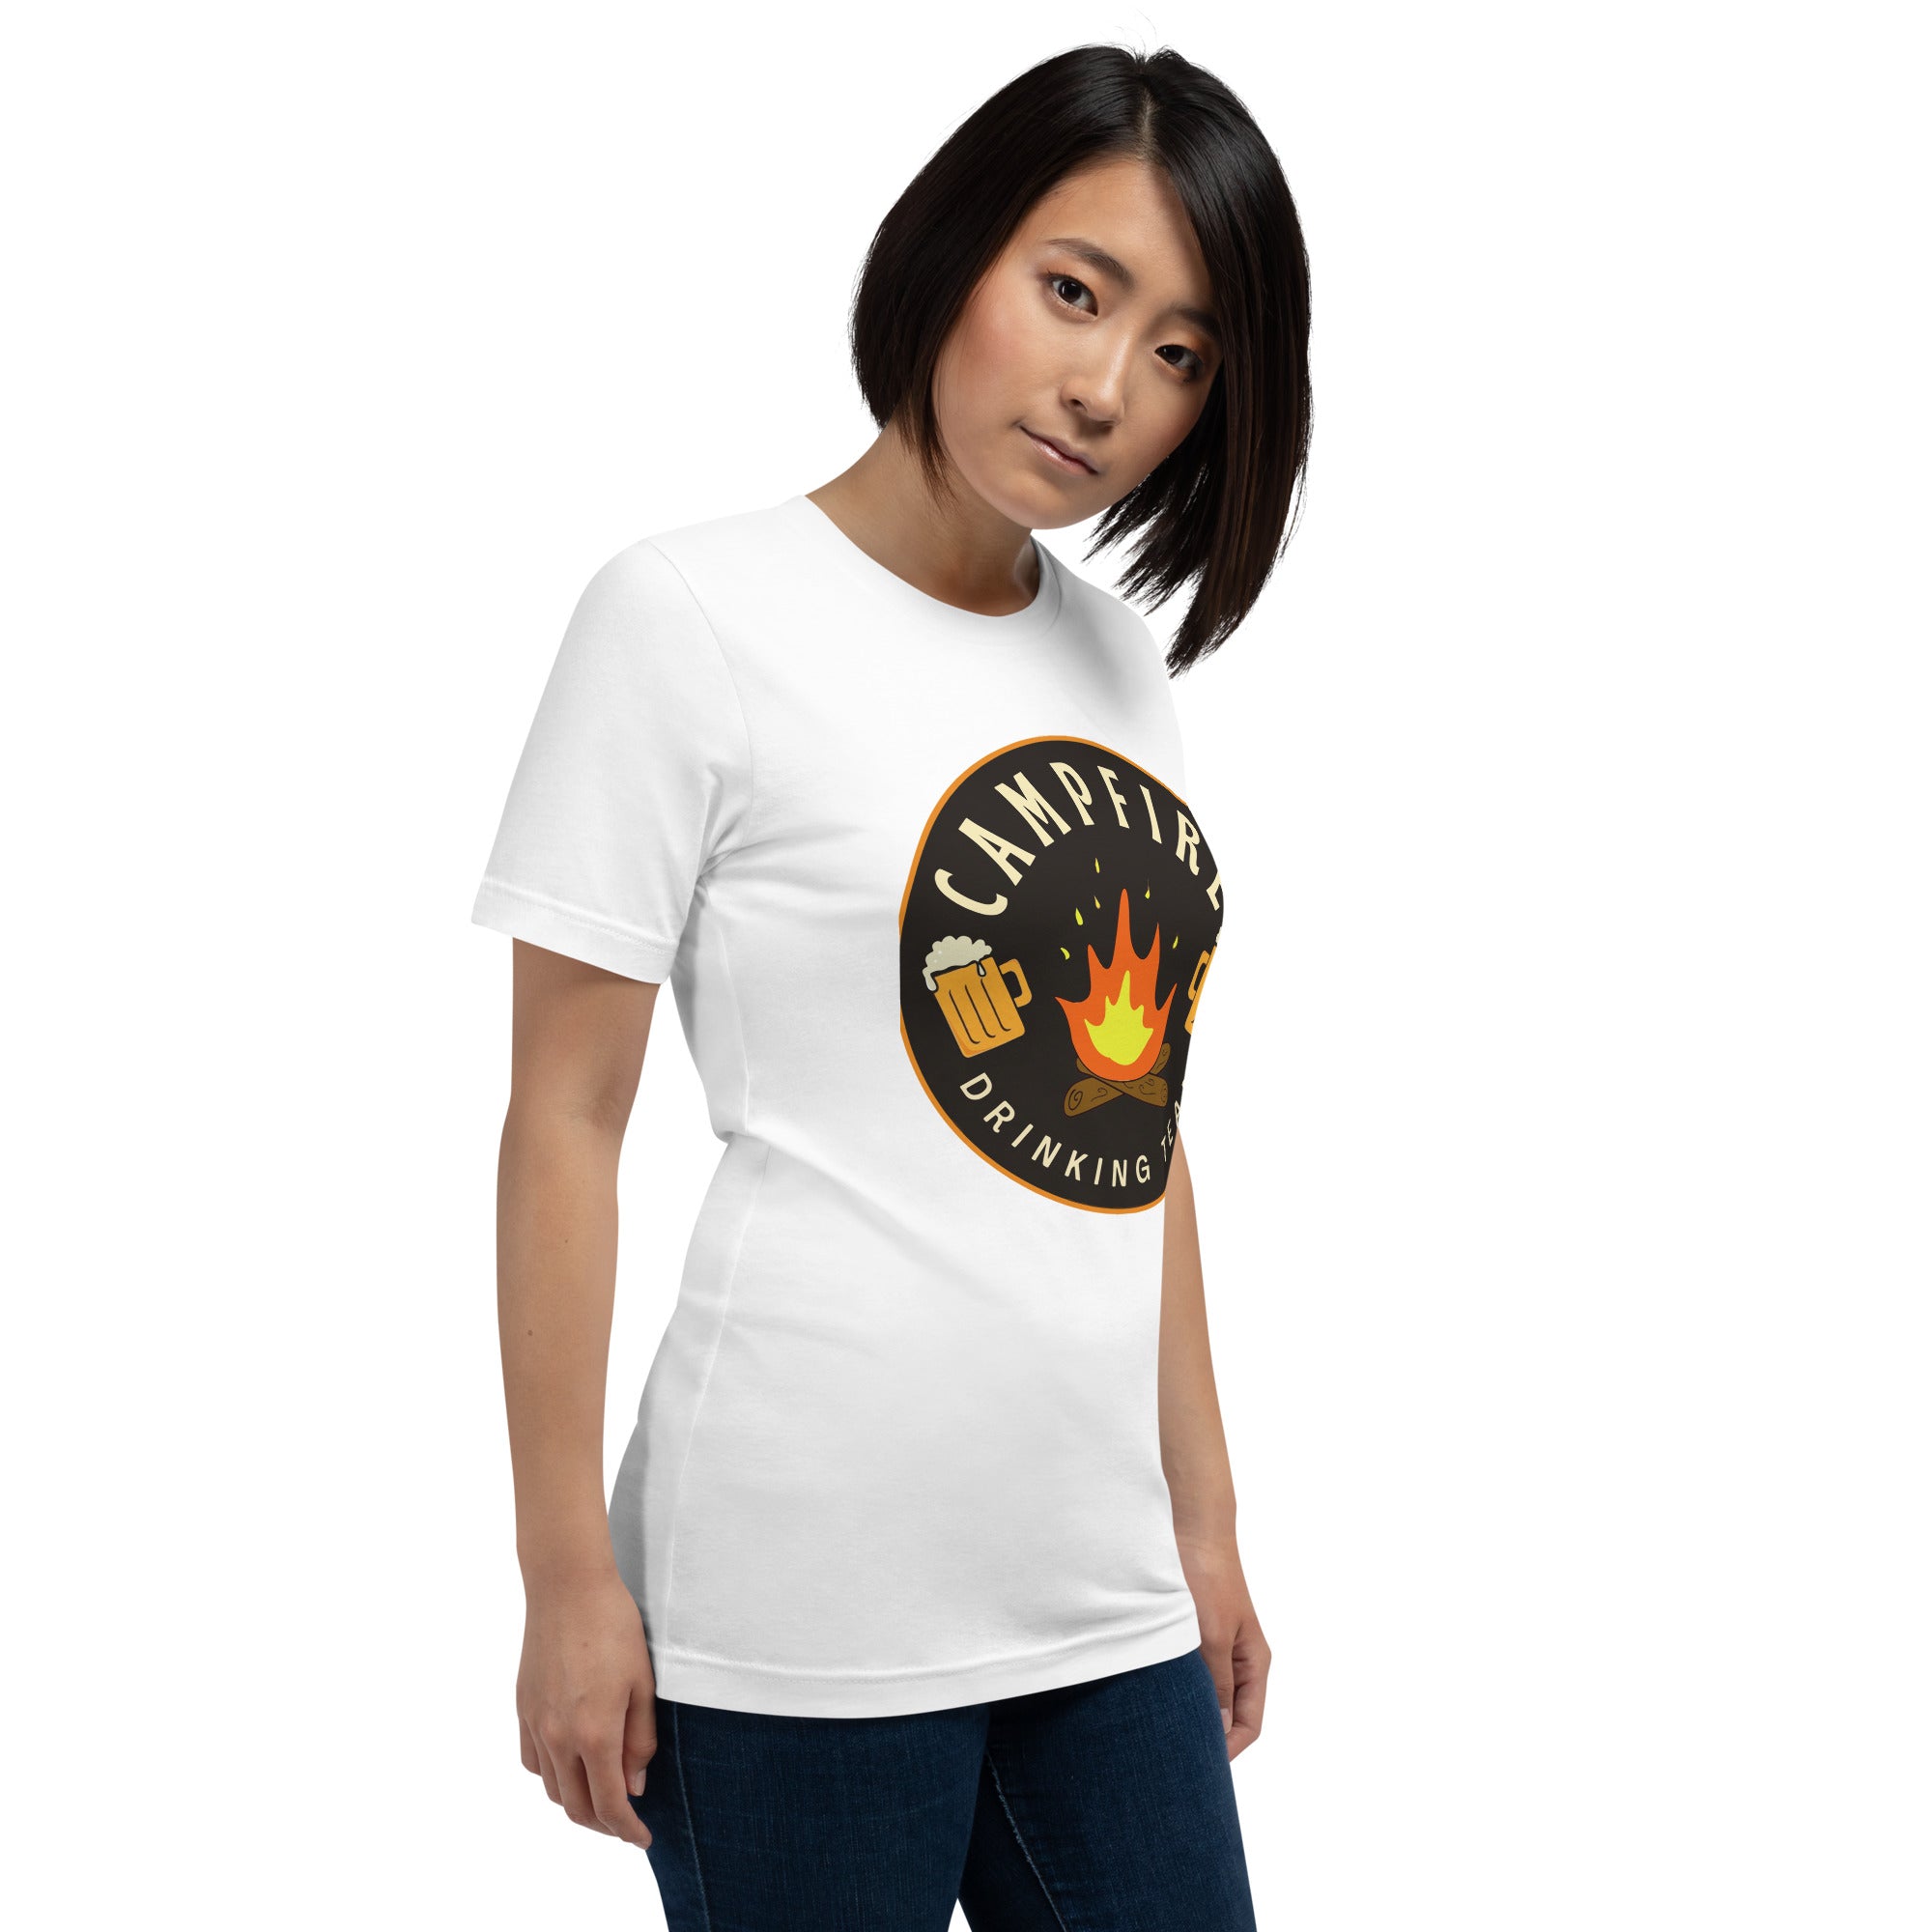 Unisex t-shirt, gift idea Camping T Shirt, back to school